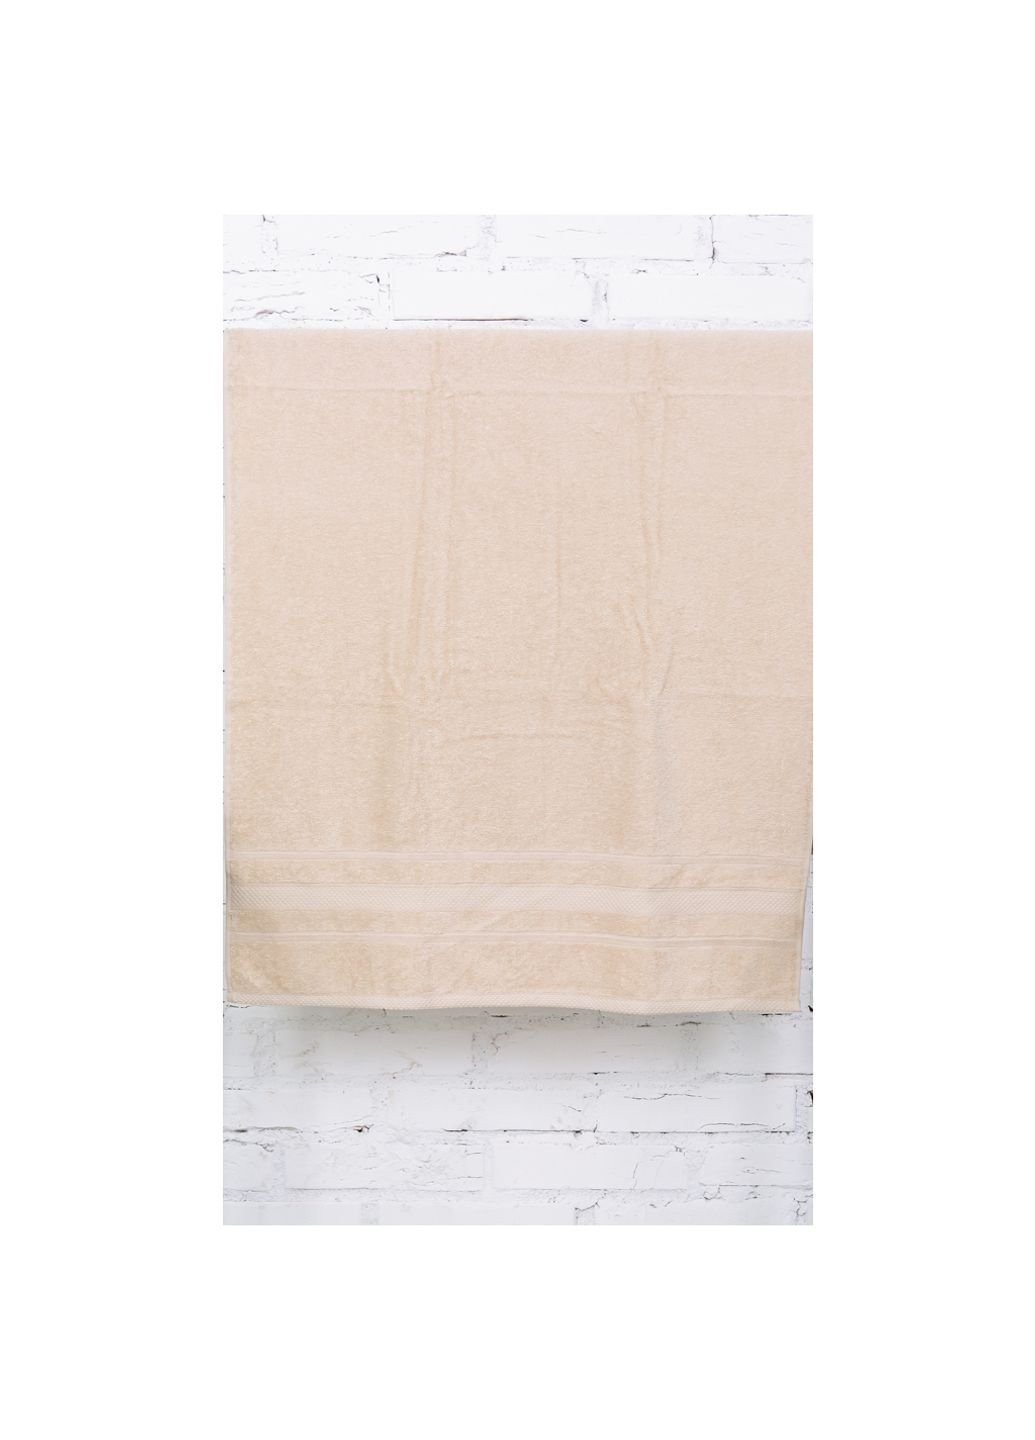 Mirson полотенце банное №5014 softness beige 40x70 см (2200003181647) бежевый производство - Украина